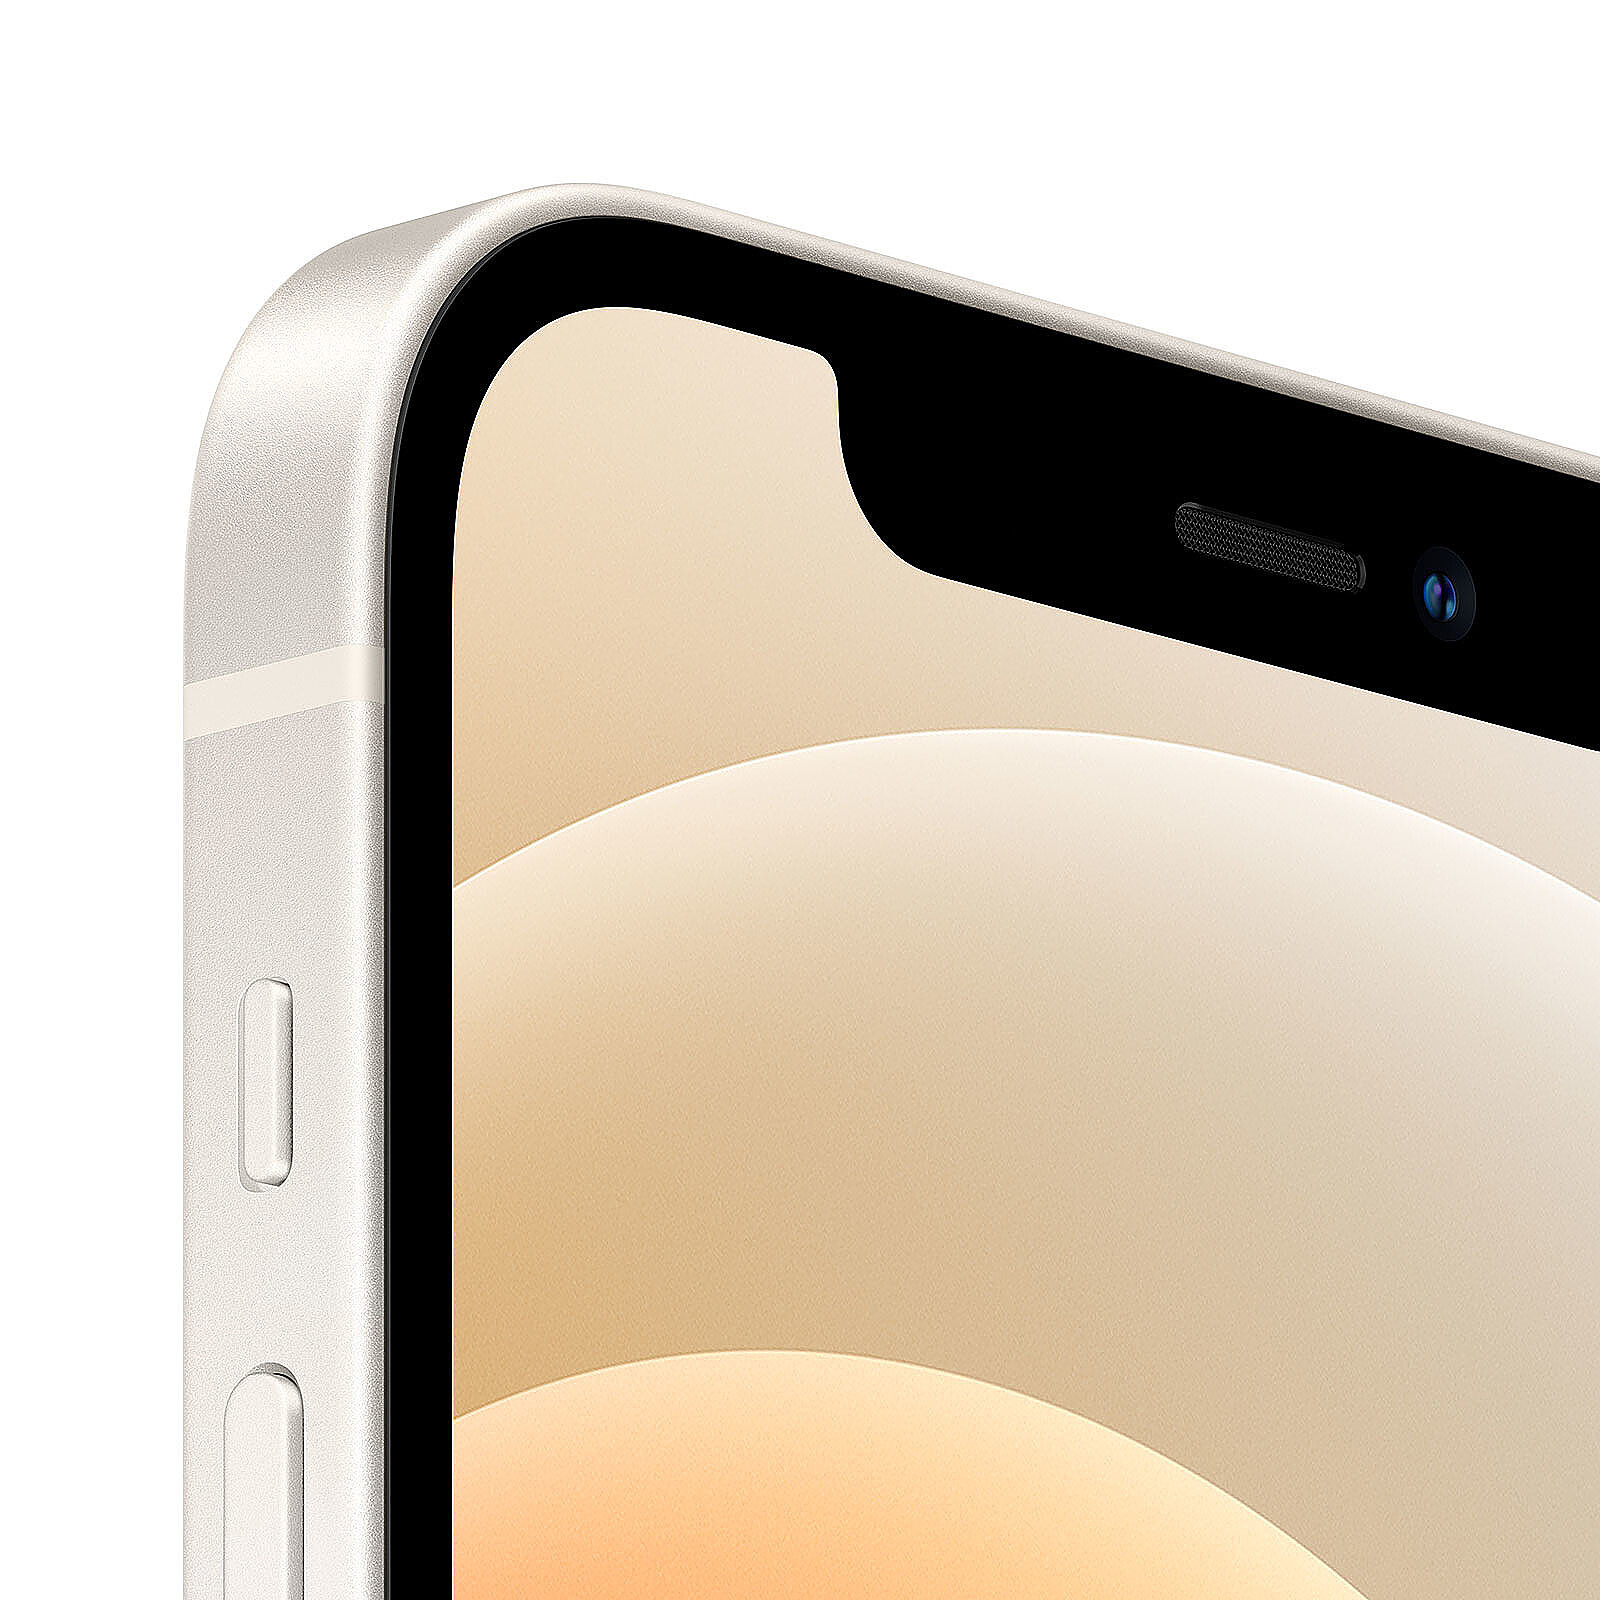 Los iPhone 12 Pro tendrán una pantalla ultrarrápida - Meristation